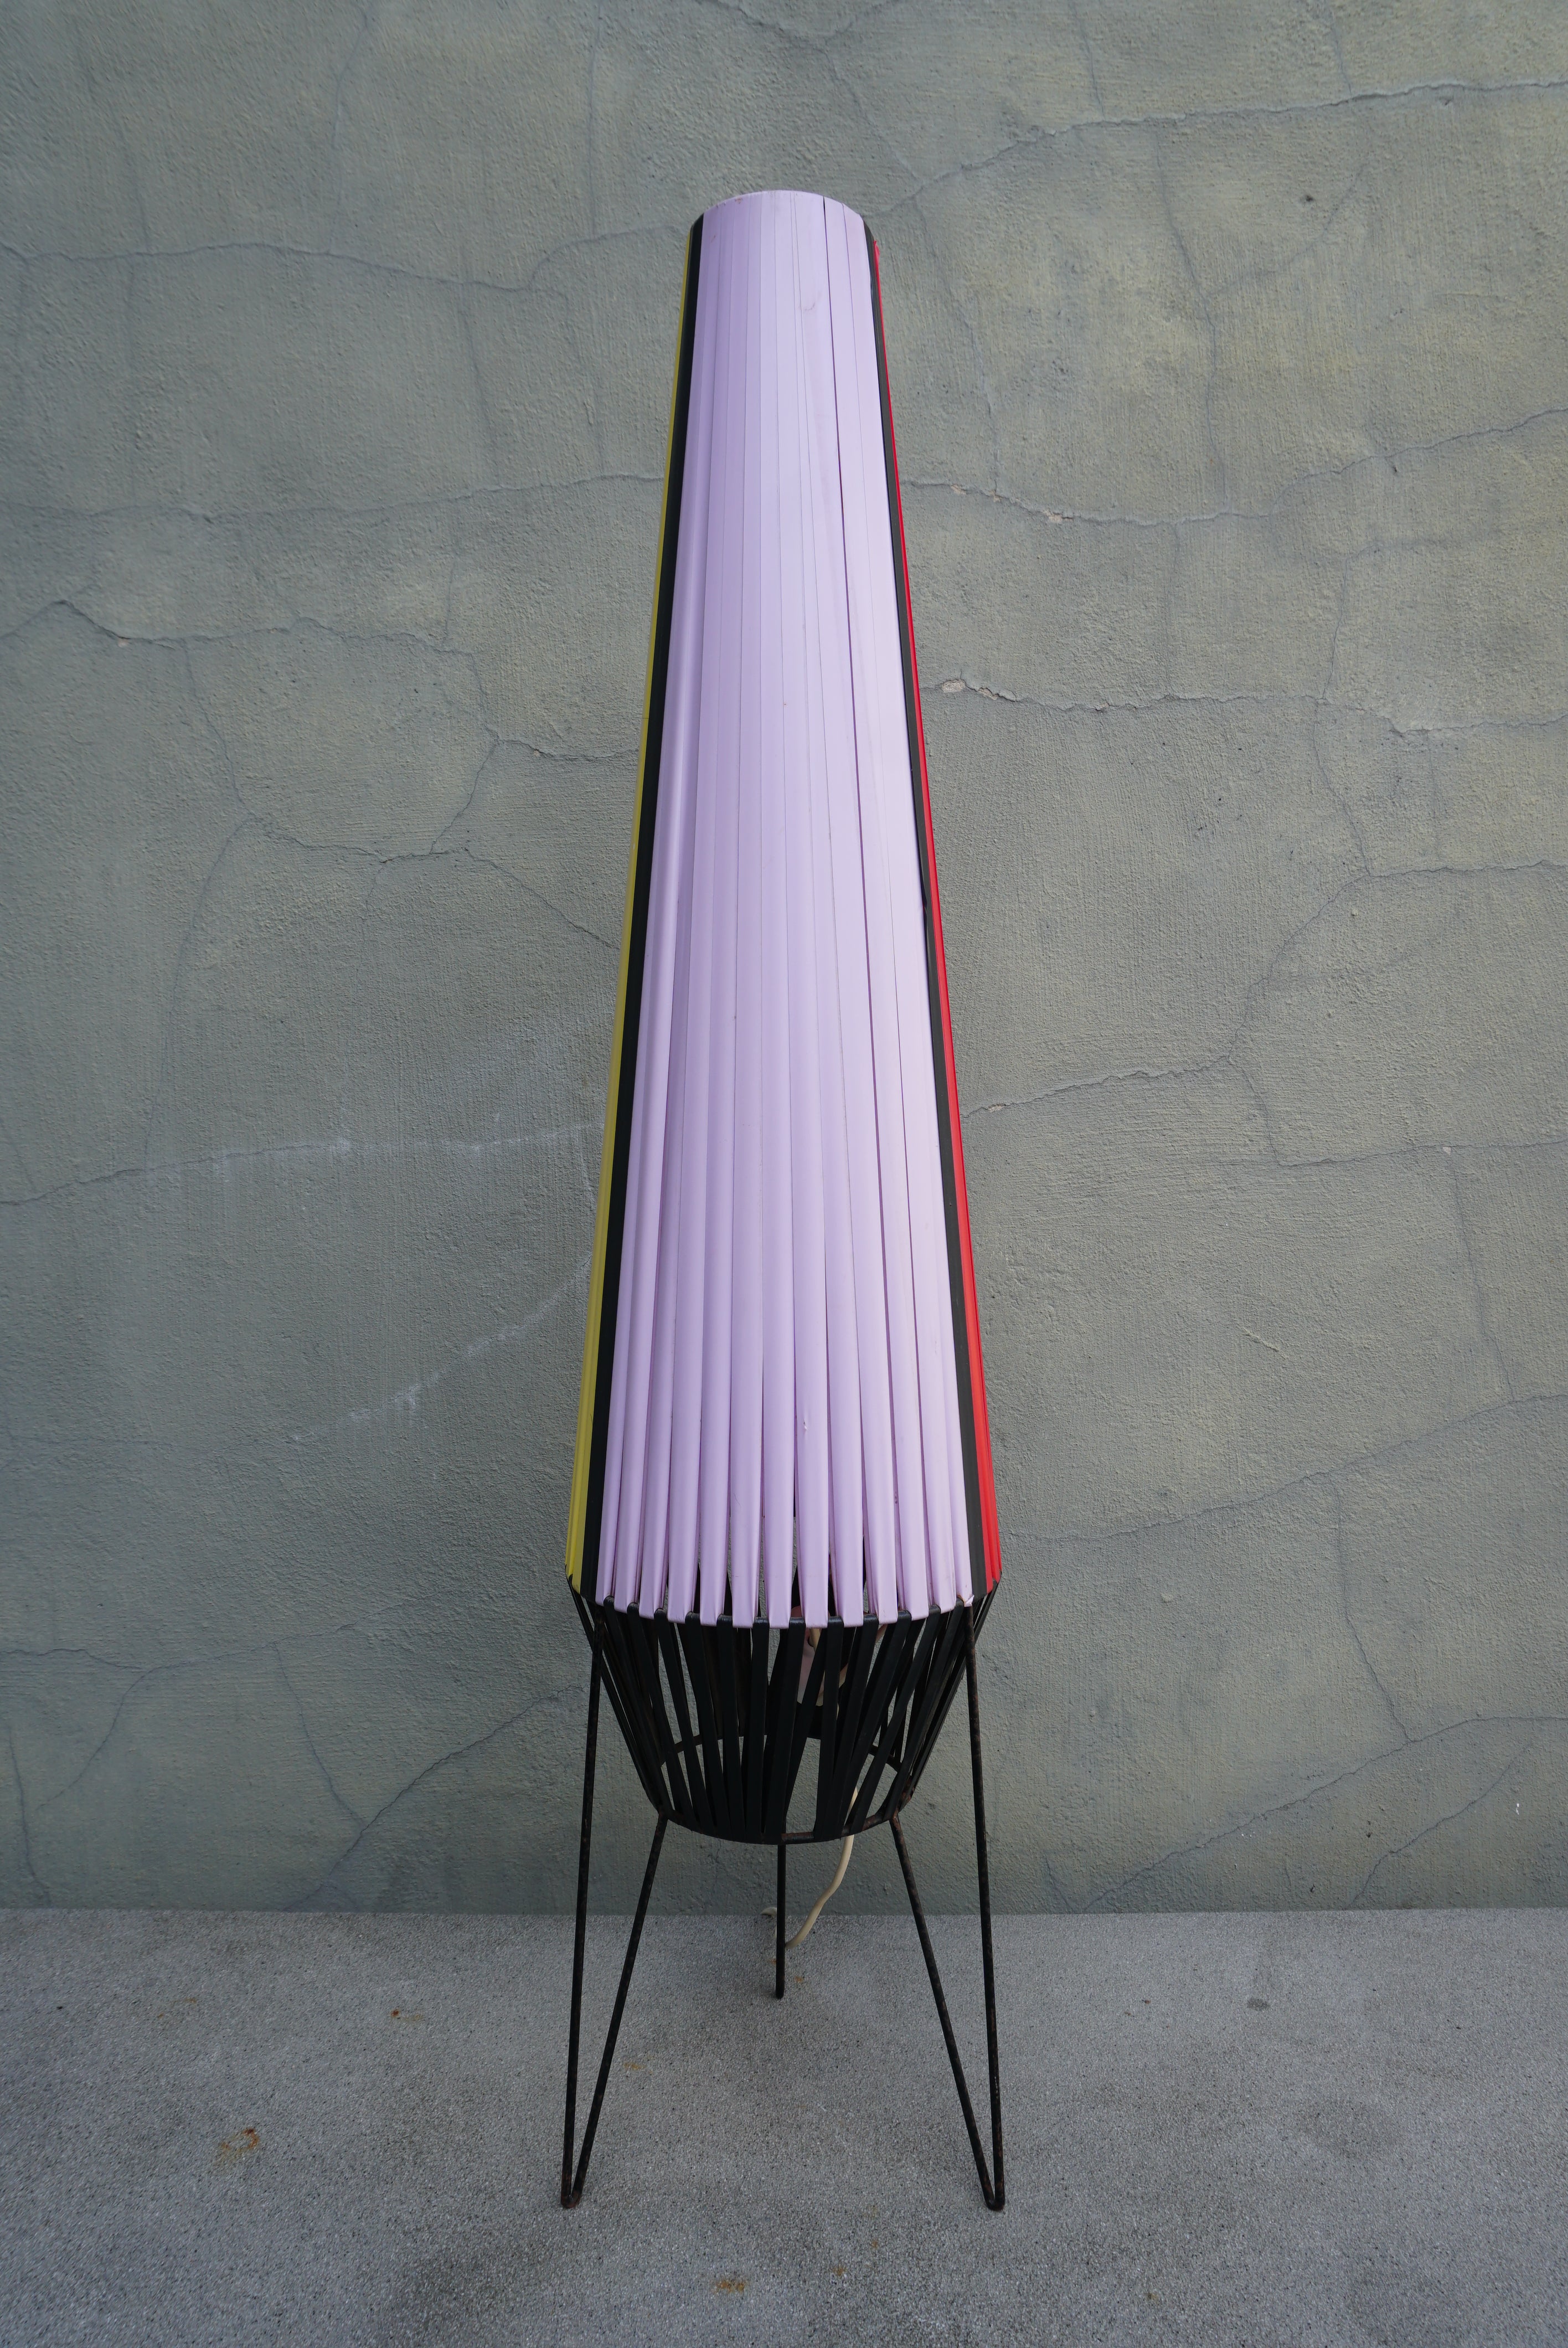 Rocked Tripod Floor Lamp, Sweden 1950s In Good Condition For Sale In Antwerp, BE